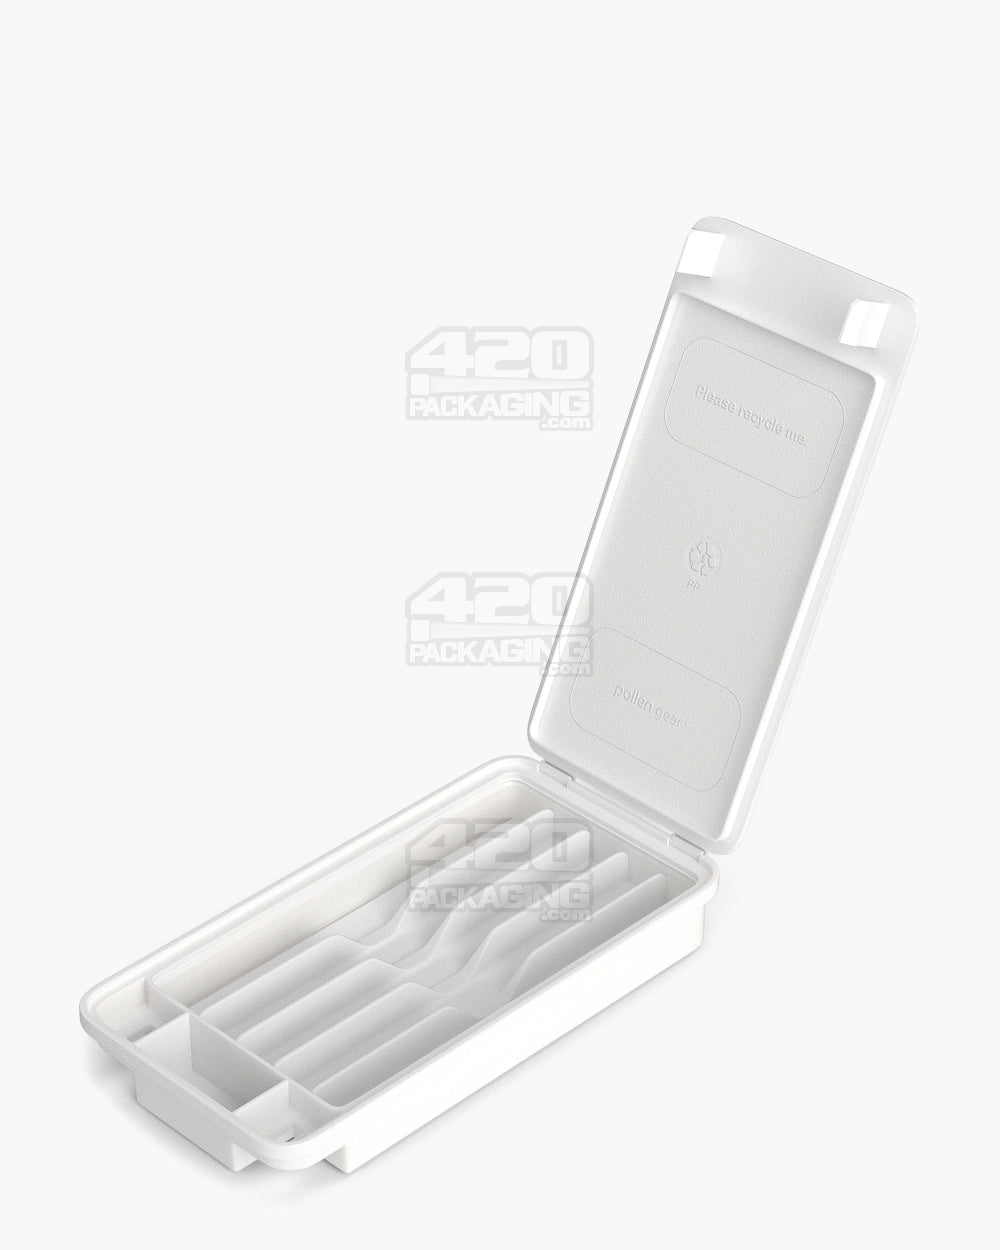 25mm Pollen Gear SnapTech Large White Plastic Insert Tray Foam 2500/Box - 6